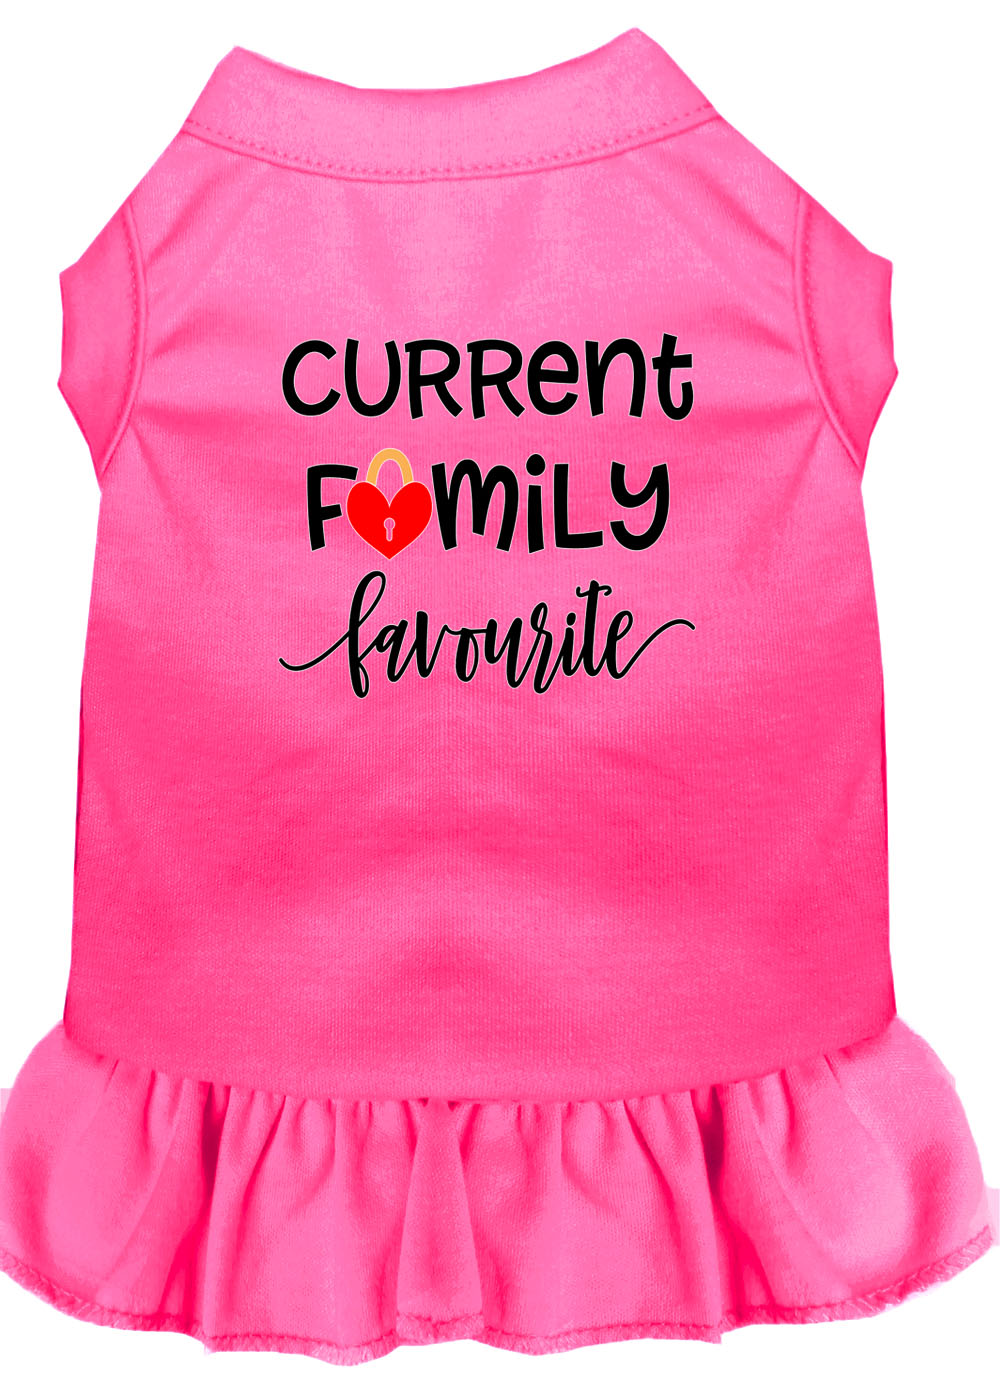 Family Favorite Screen Print Dog Dress Bright Pink Lg